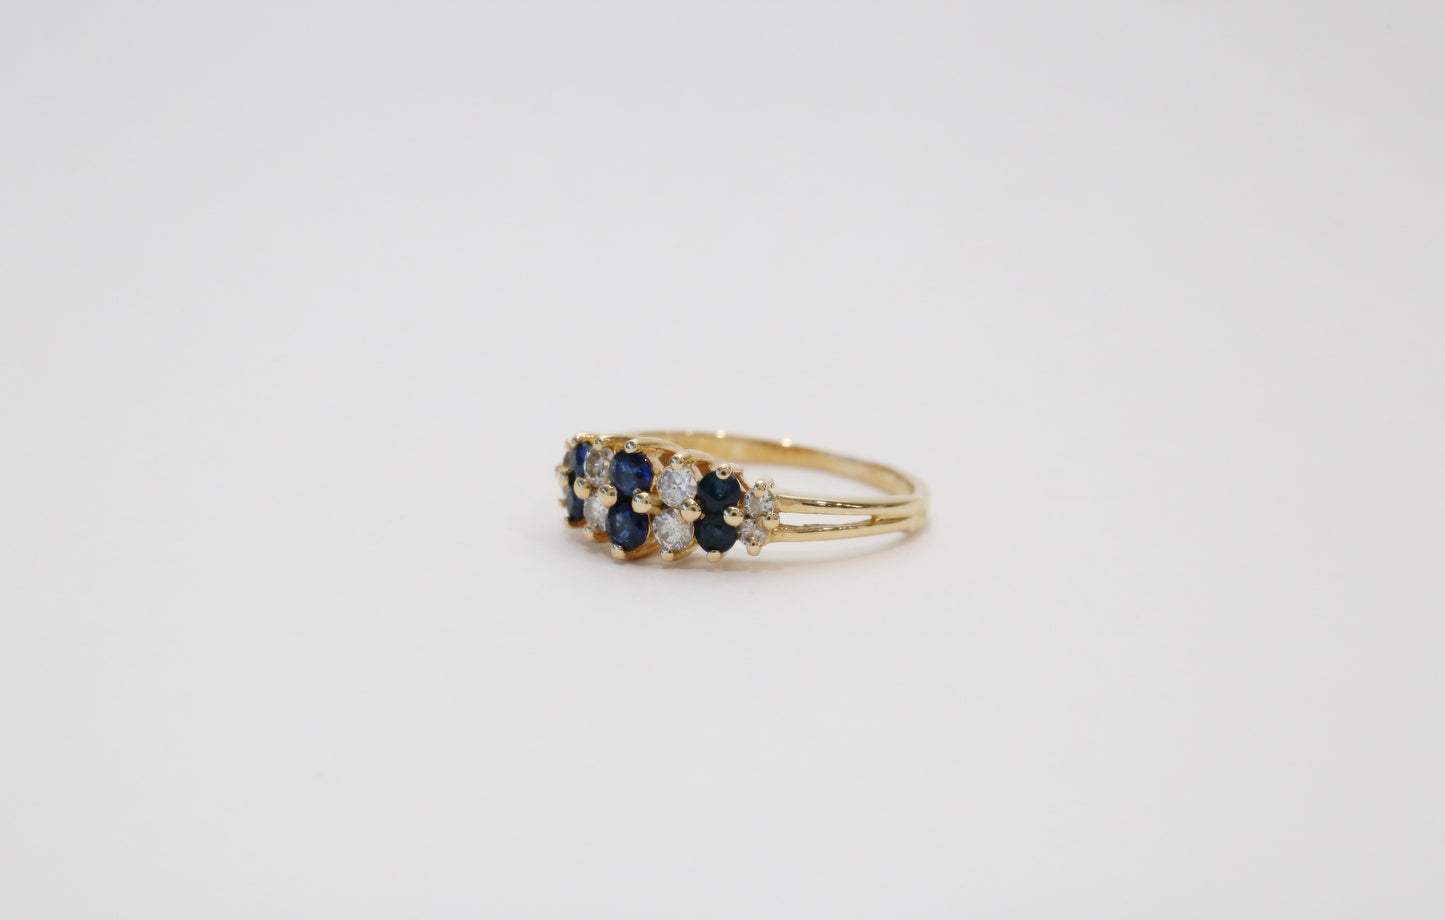 14k Yellow Gold Sapphire & Diamond Ring, Size 6.5 - 2.2g